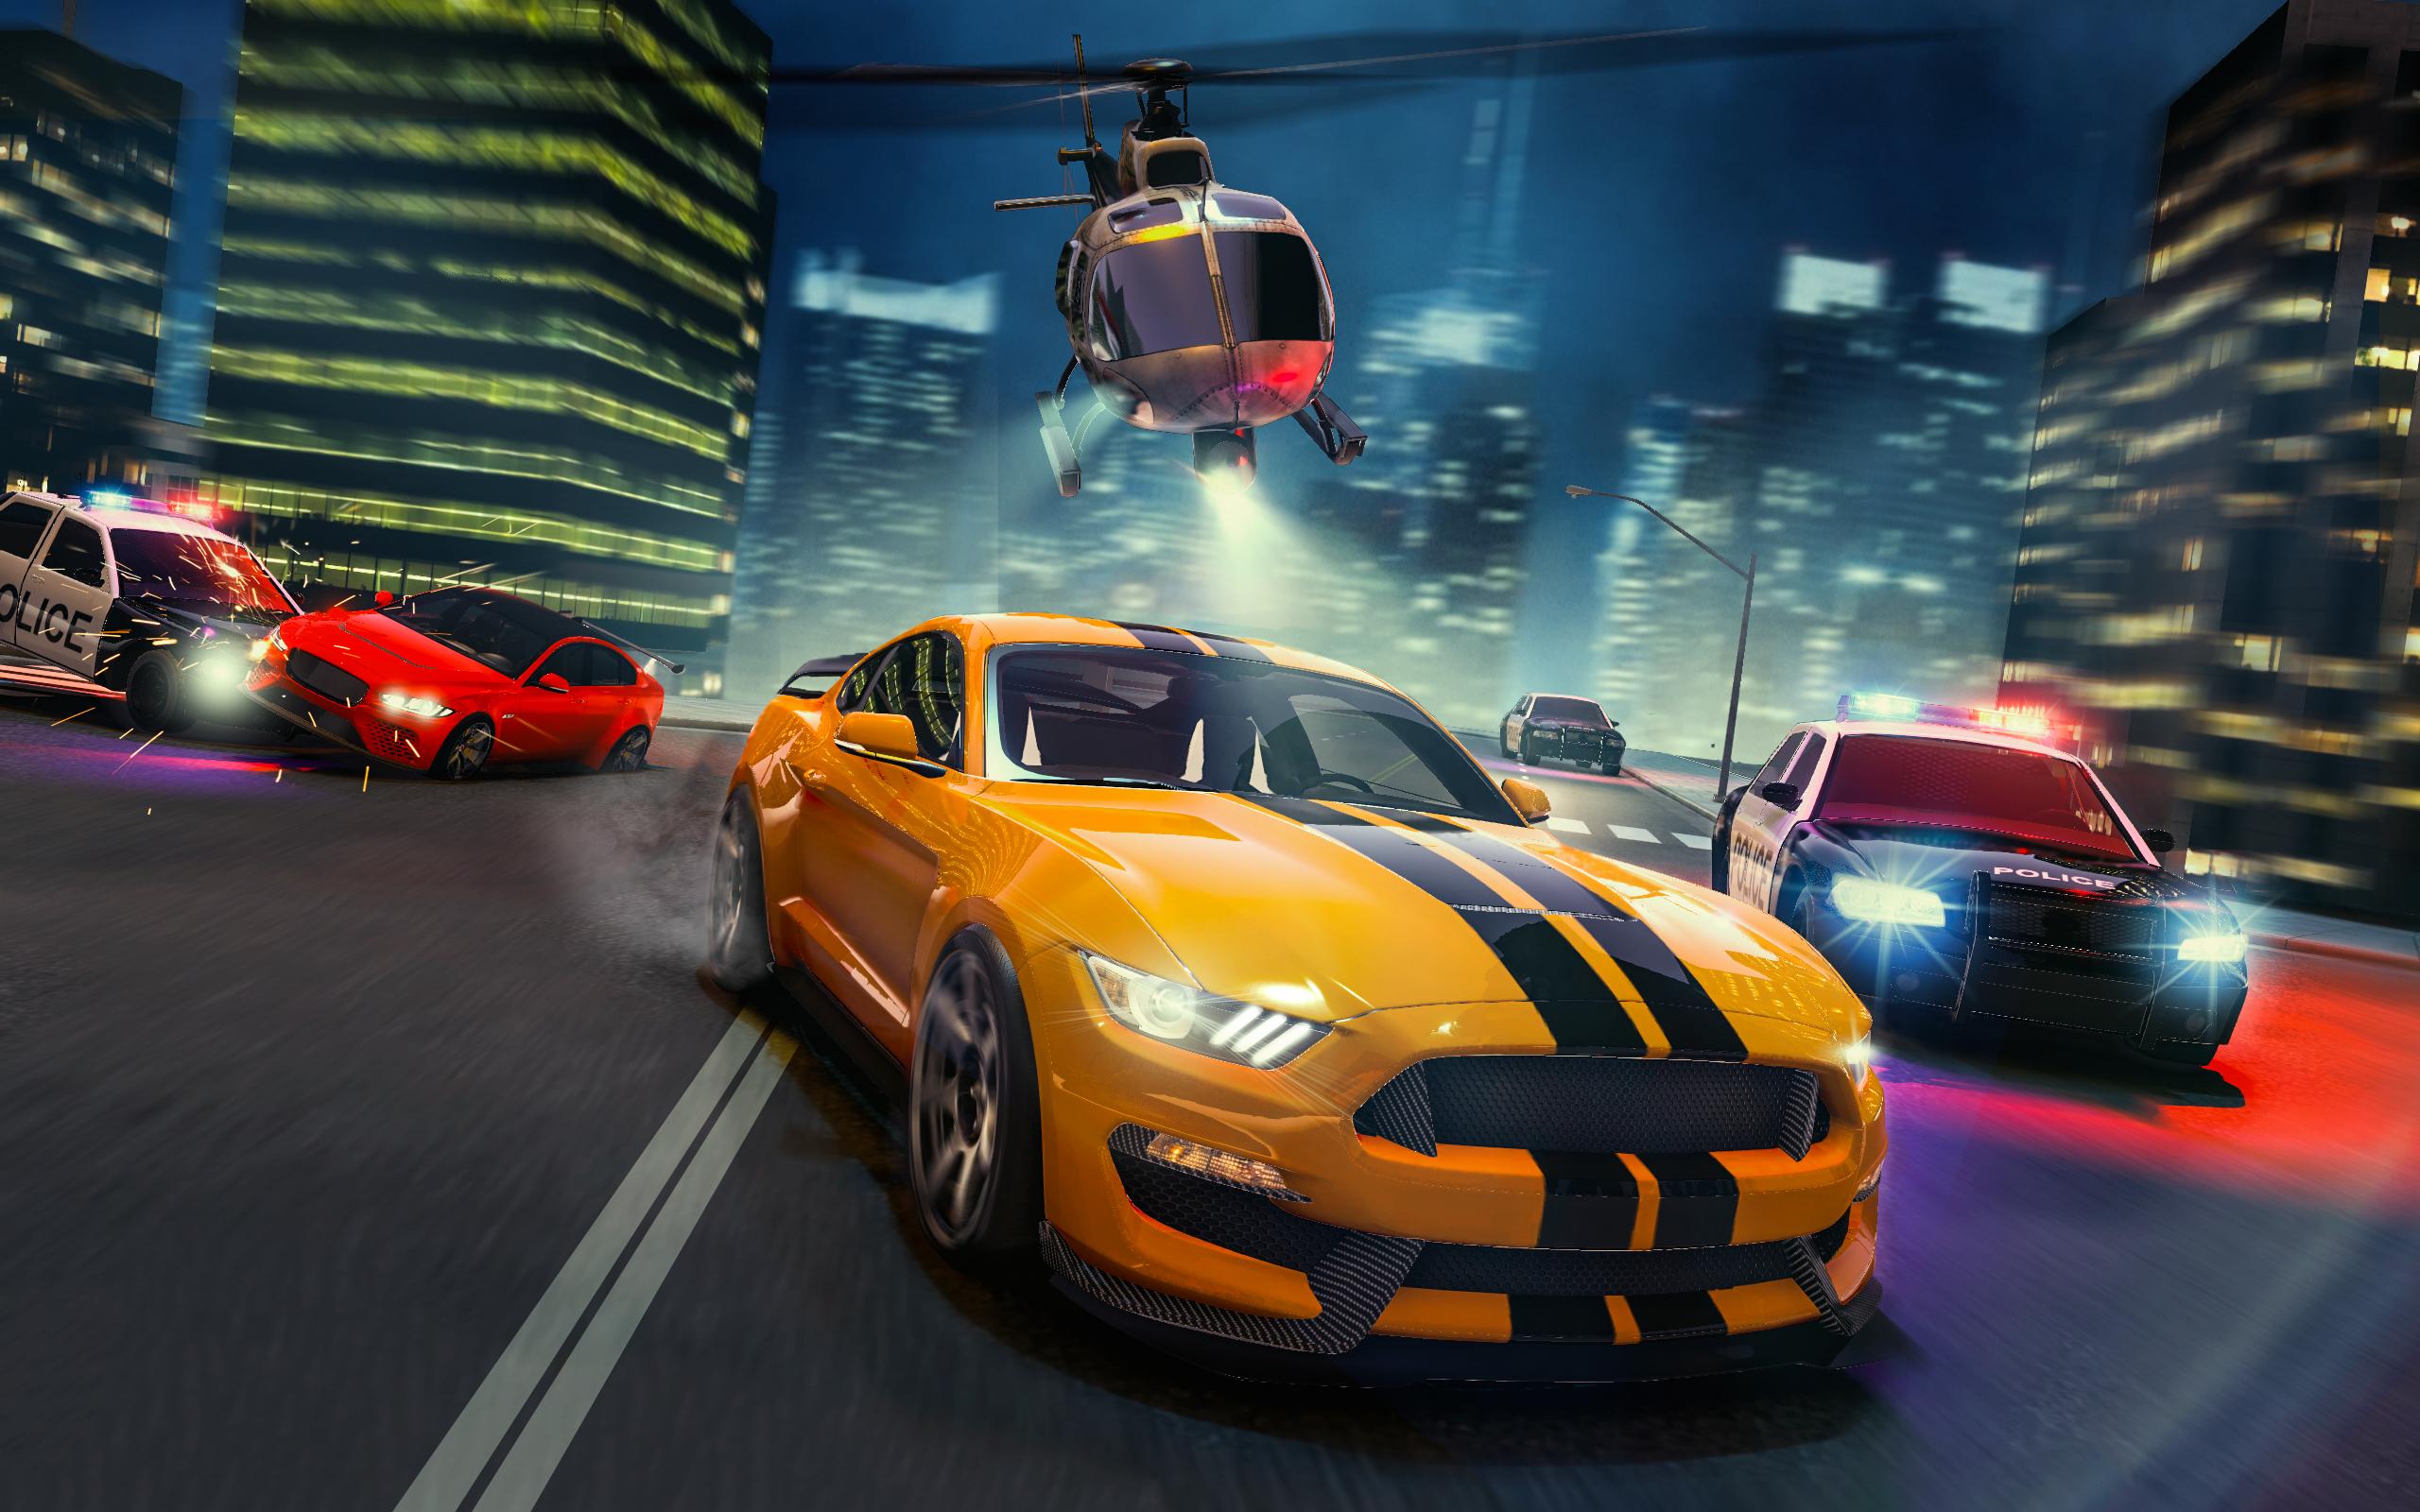 Racing Car Drift Simulator-Drifting Car Games 2020 for Android - APK